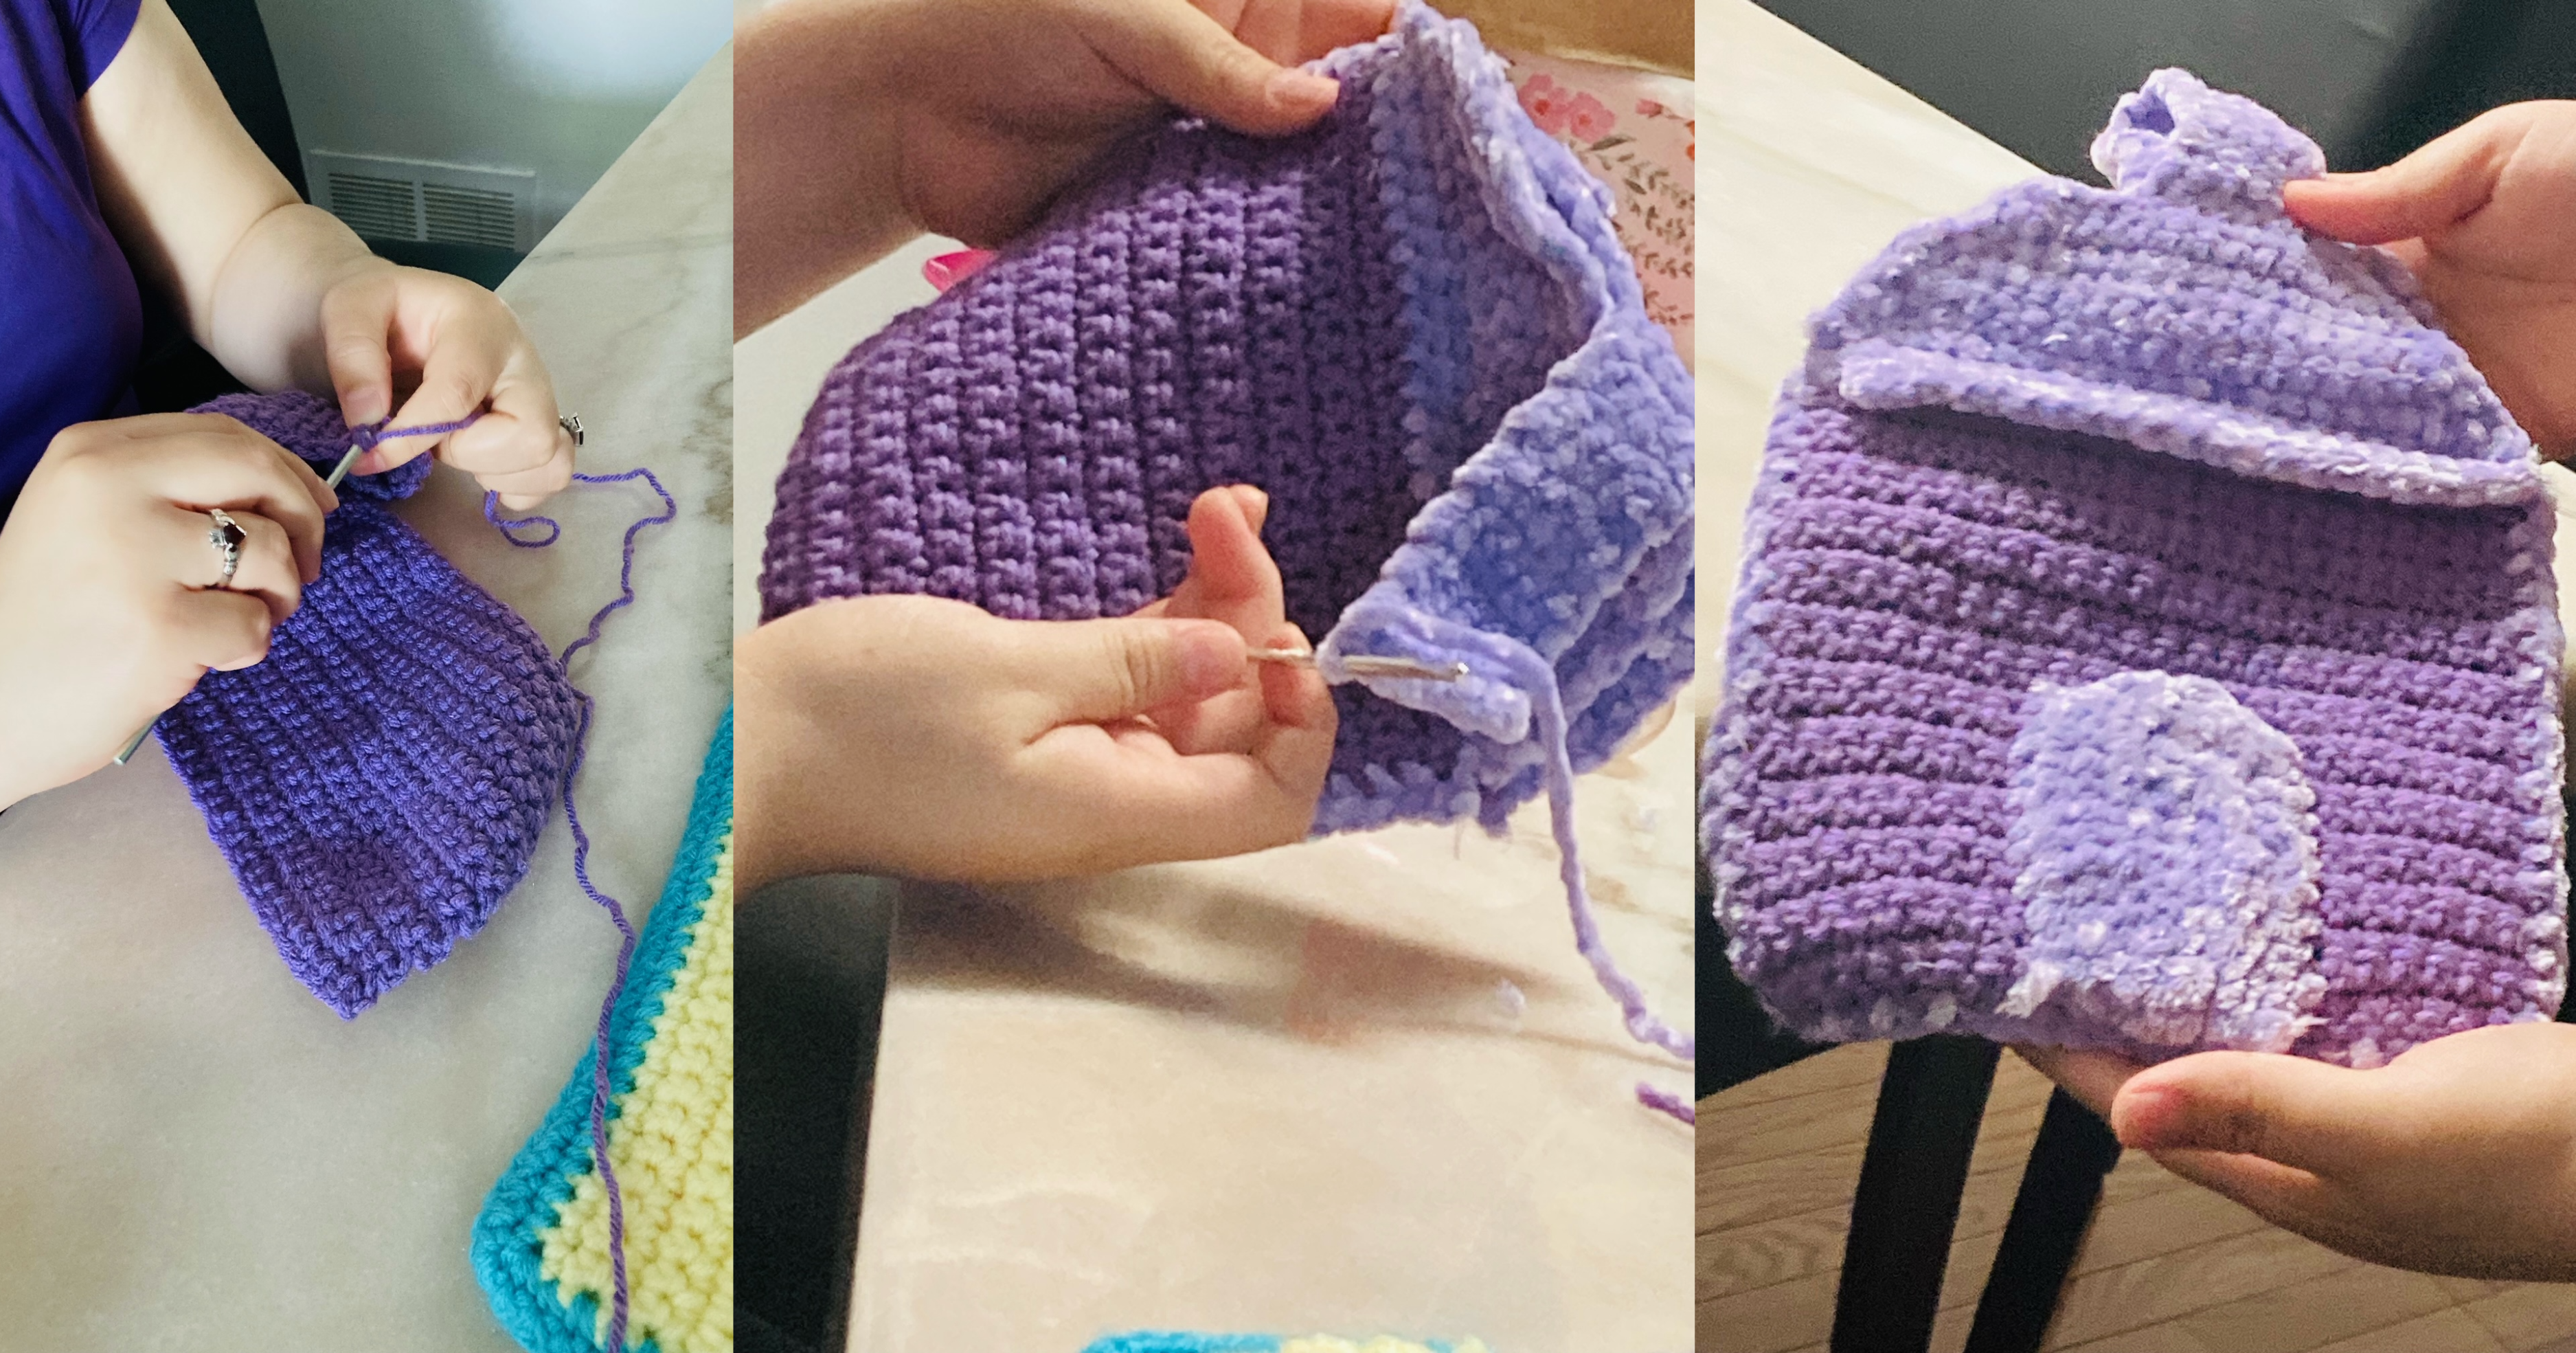 Kits to Heart Volunteer Emily Lopez Crochet Process